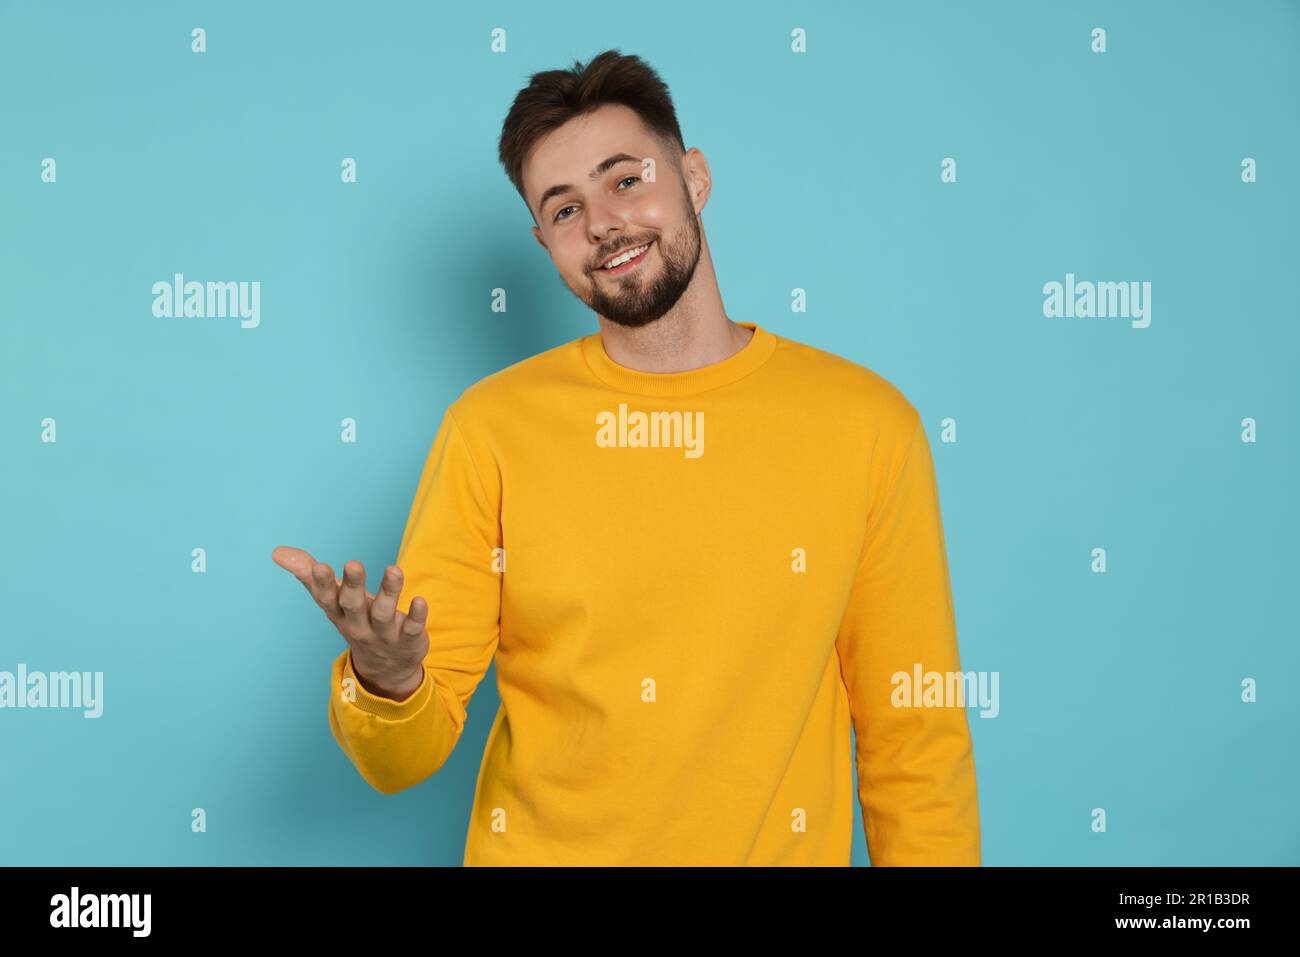 Handsome man in yellow sweatshirt gesturing on light blue background Stock Photo